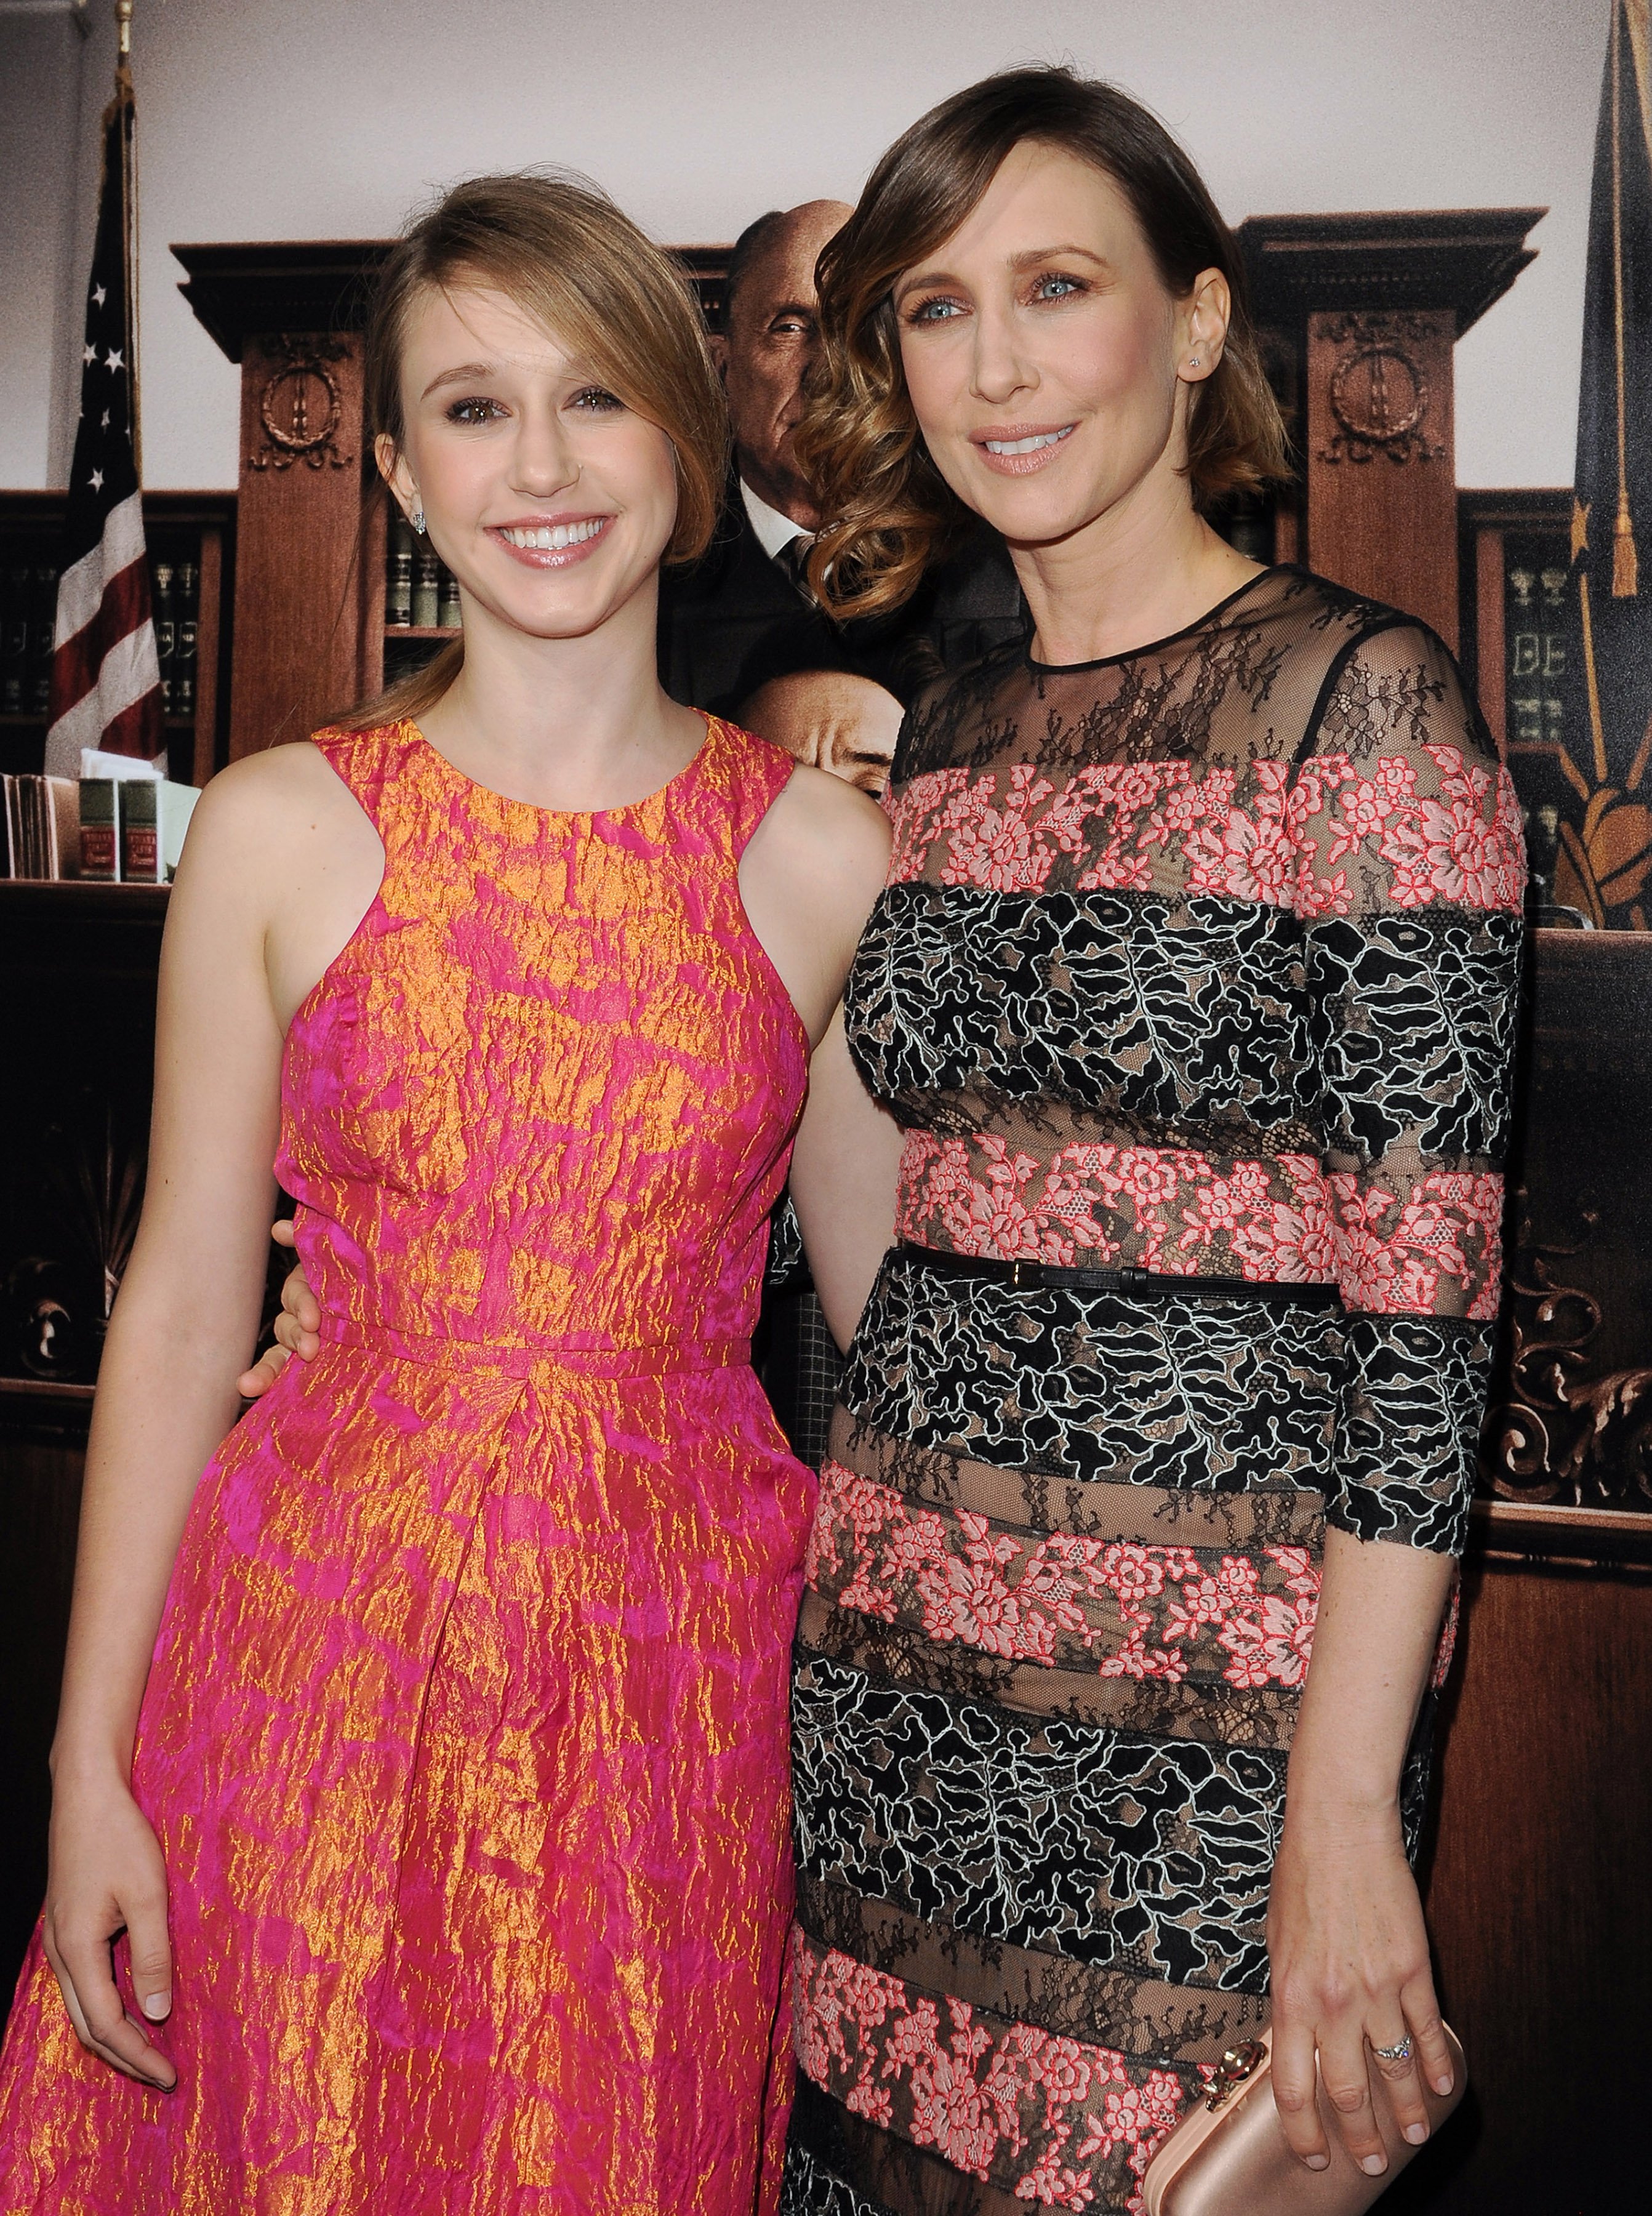 Taissa Farmiga and Vera Farmiga at the Los Angeles premiere of "The Judge" on October 1, 2014 | Source: Getty Images